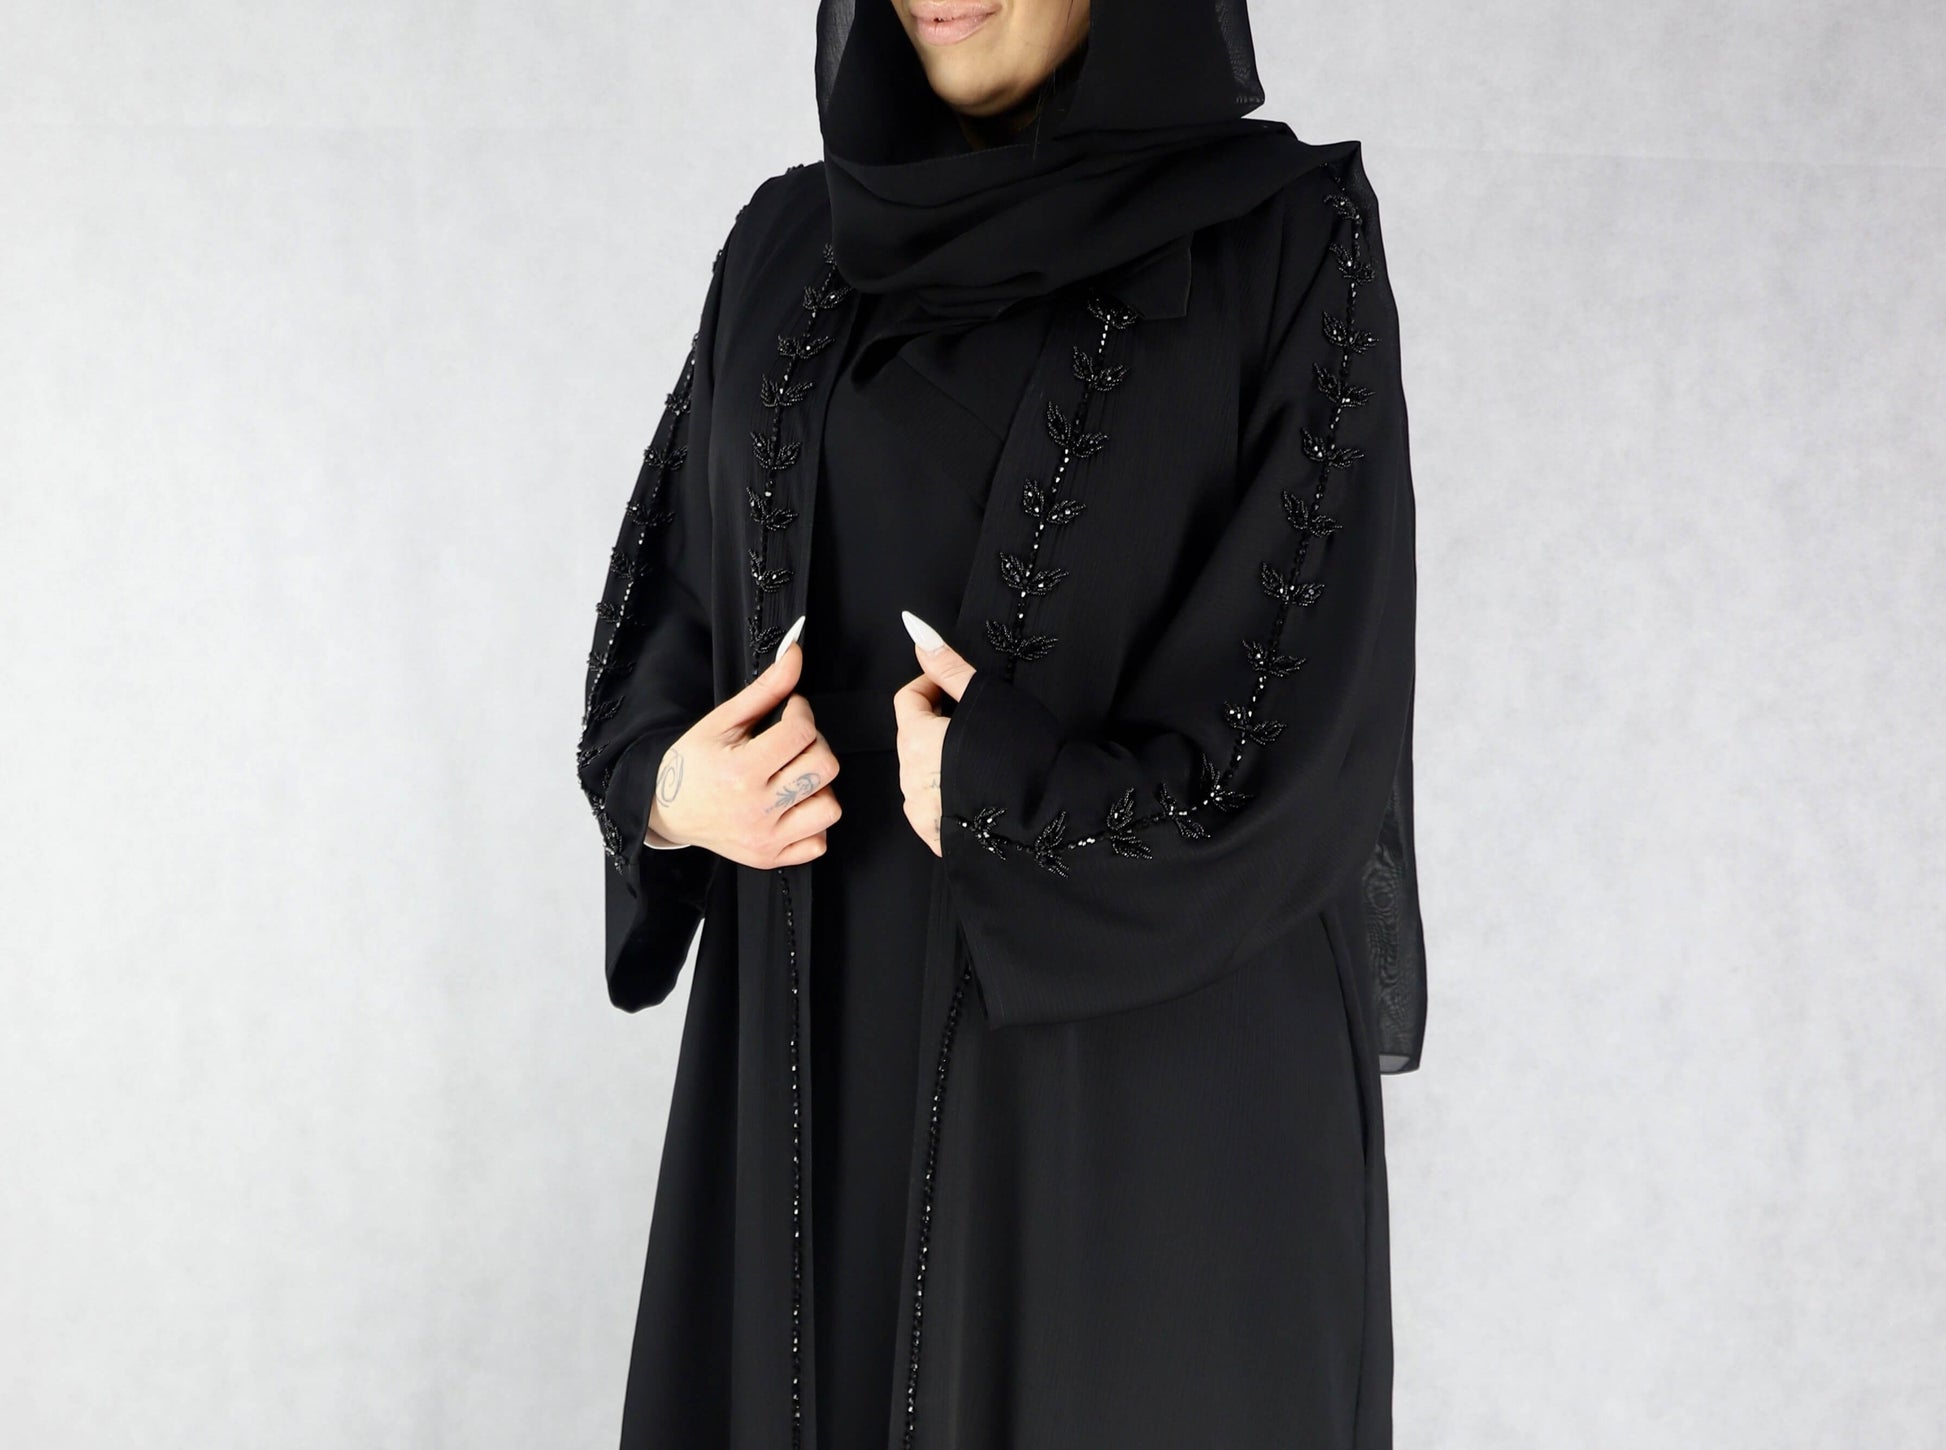 Party Wear Black Abaya With Inner Slip Dress, Beautiful Stone Handwork